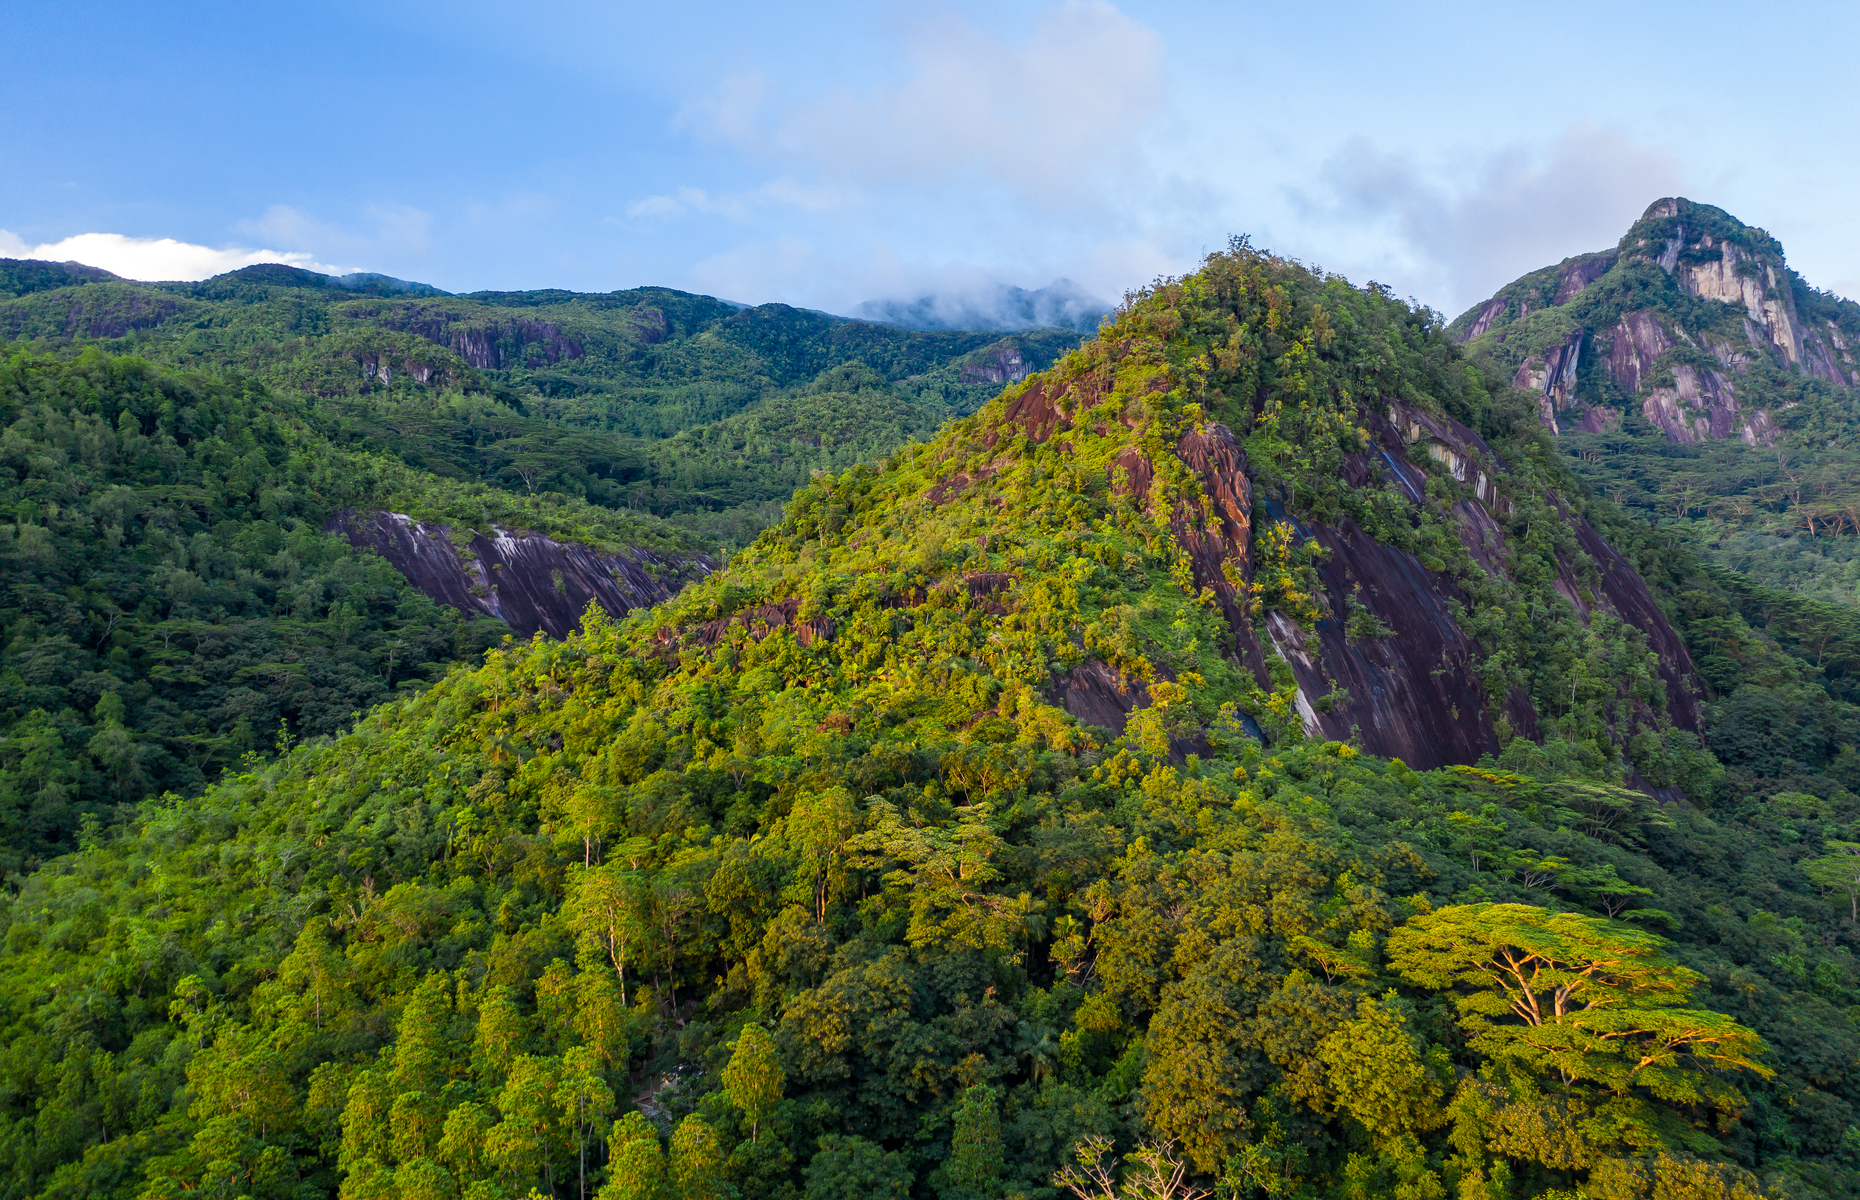 Lush mountainous interior Seychelles (Image: Aleksandra Tokarz/ Shutterstock)